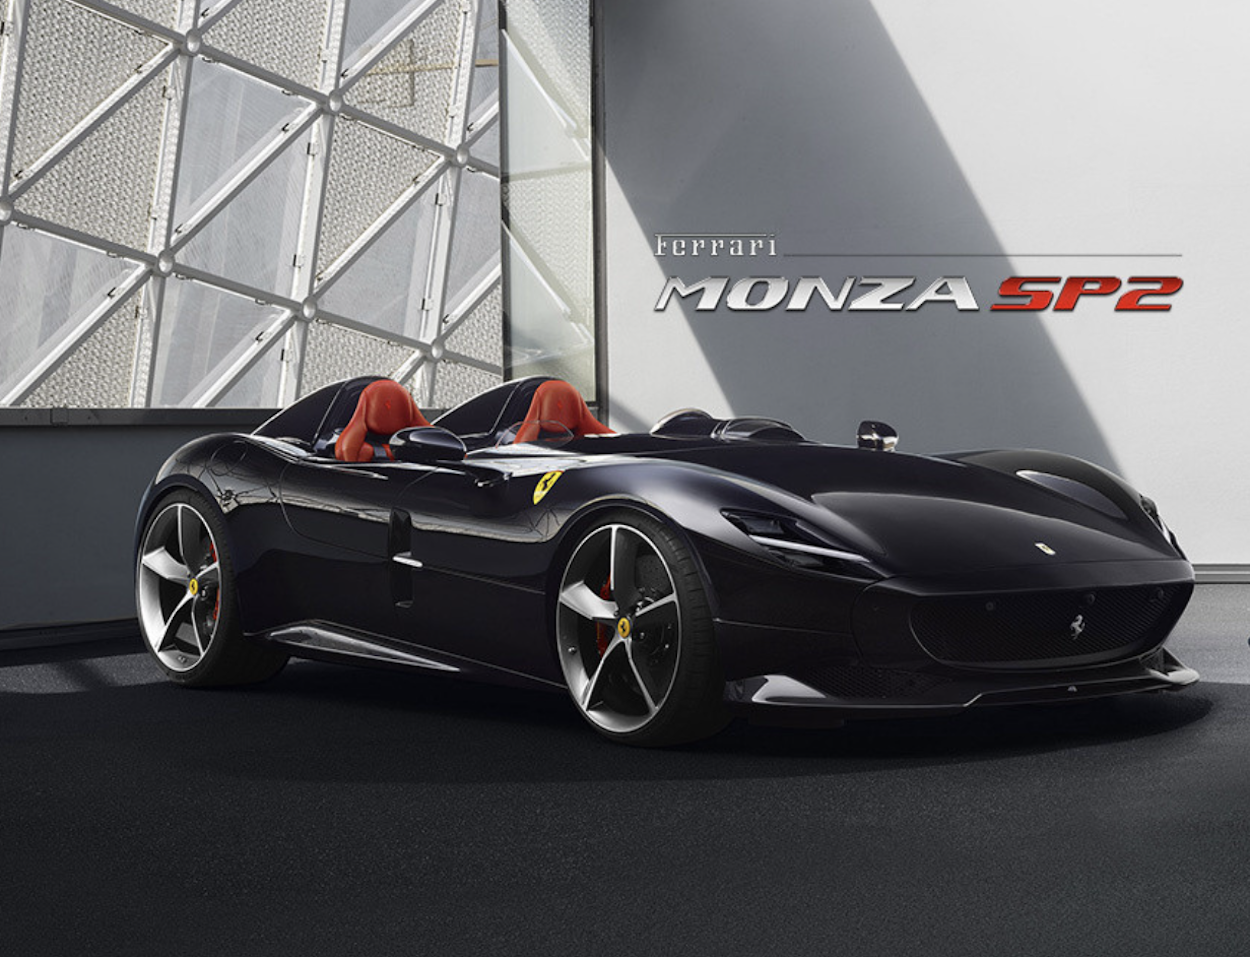 The New Ferrari Monza SP2